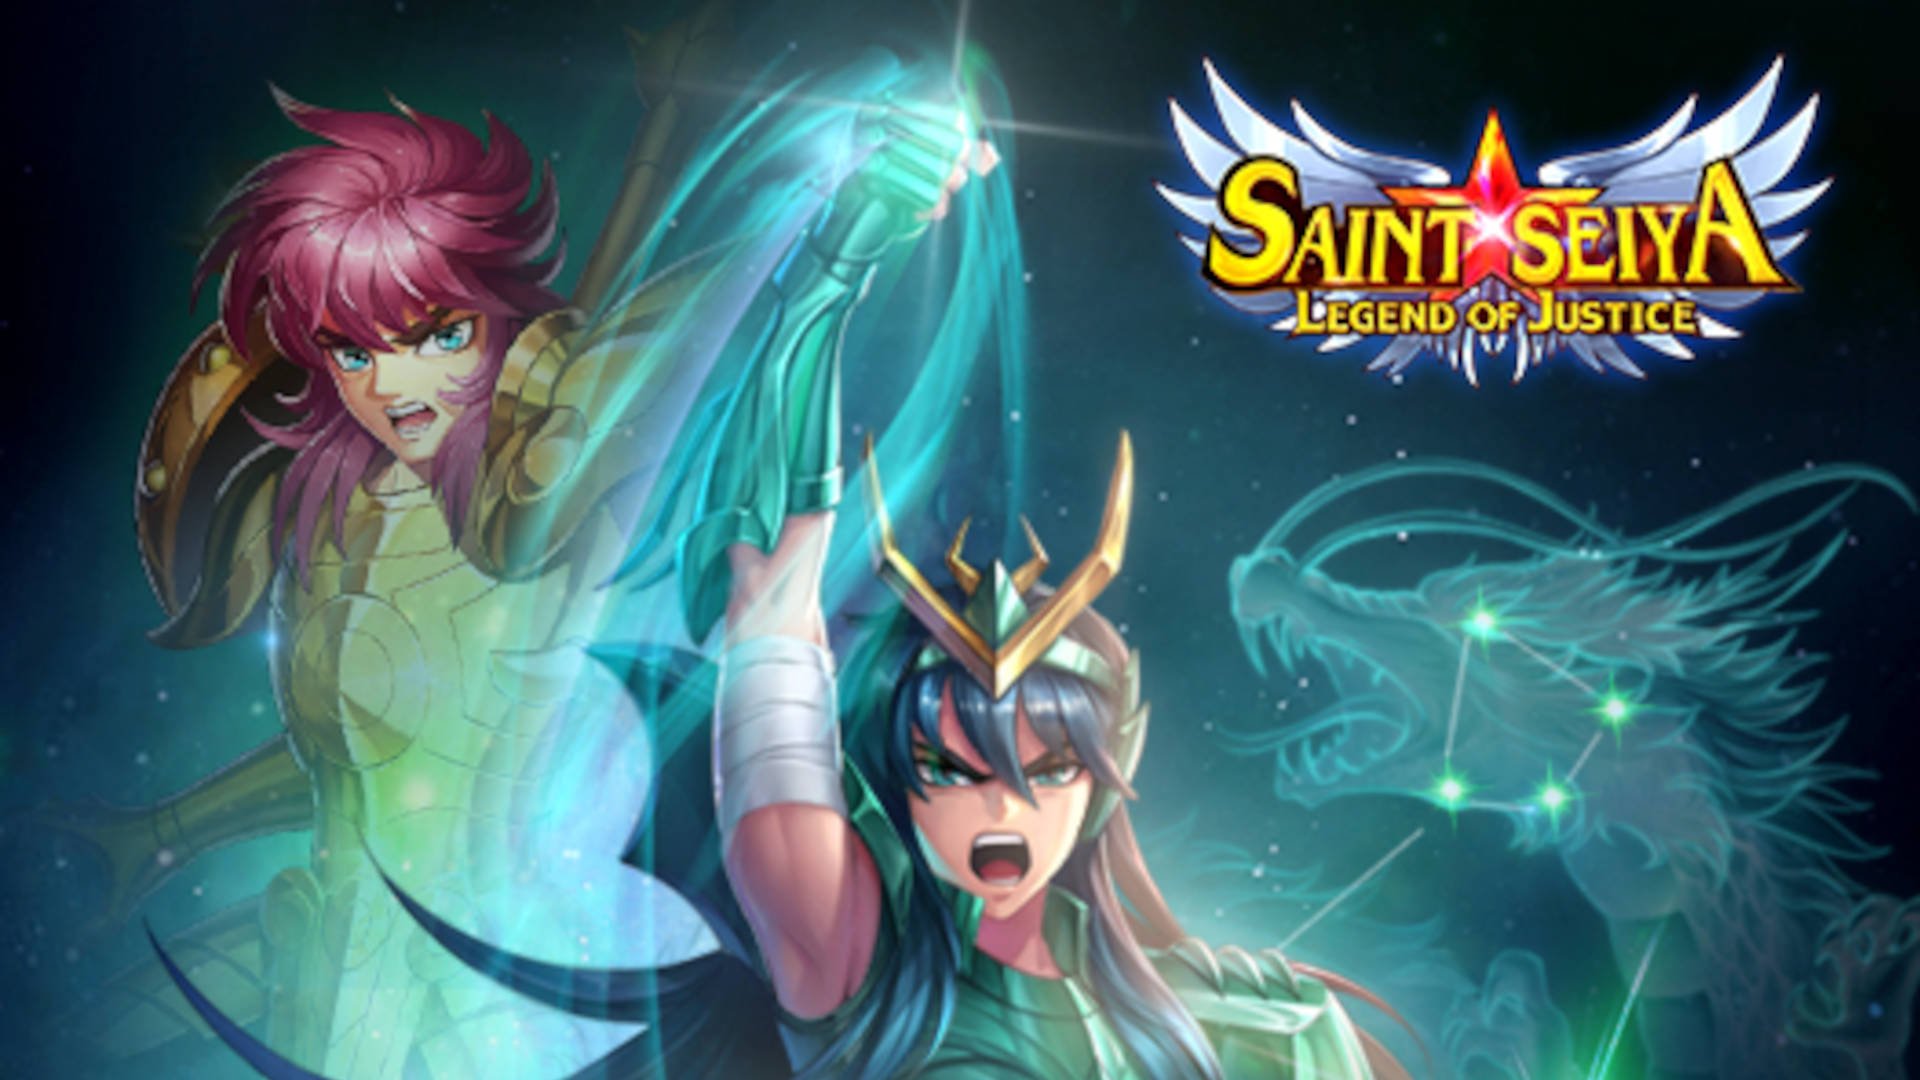 Saint Seiya: Legend of Justice Codes